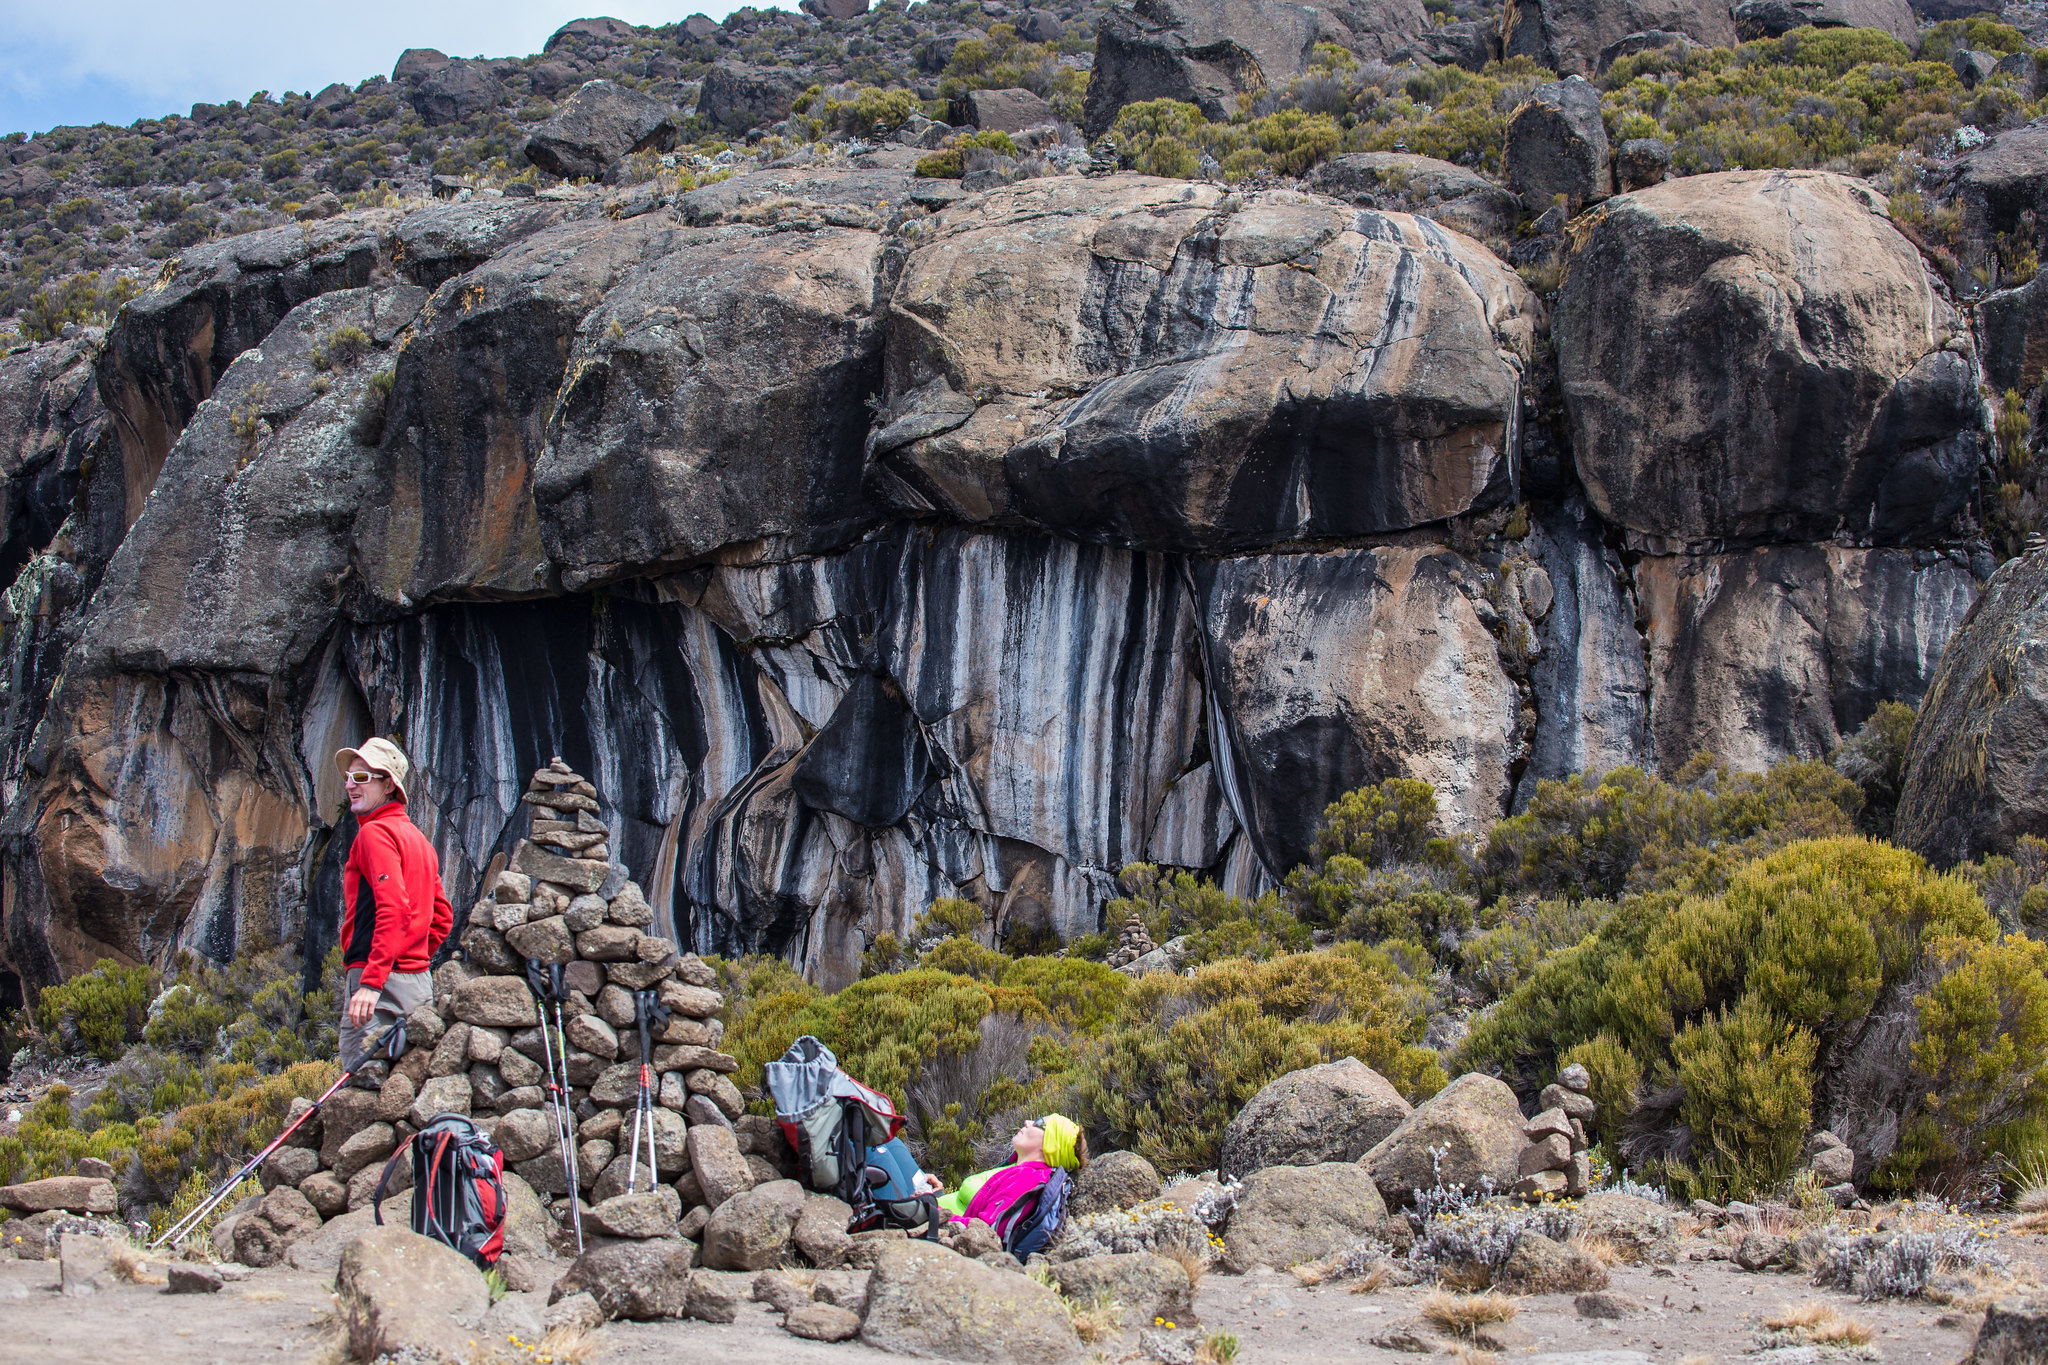 Zebra Rocks, Mount Kilimanjaro